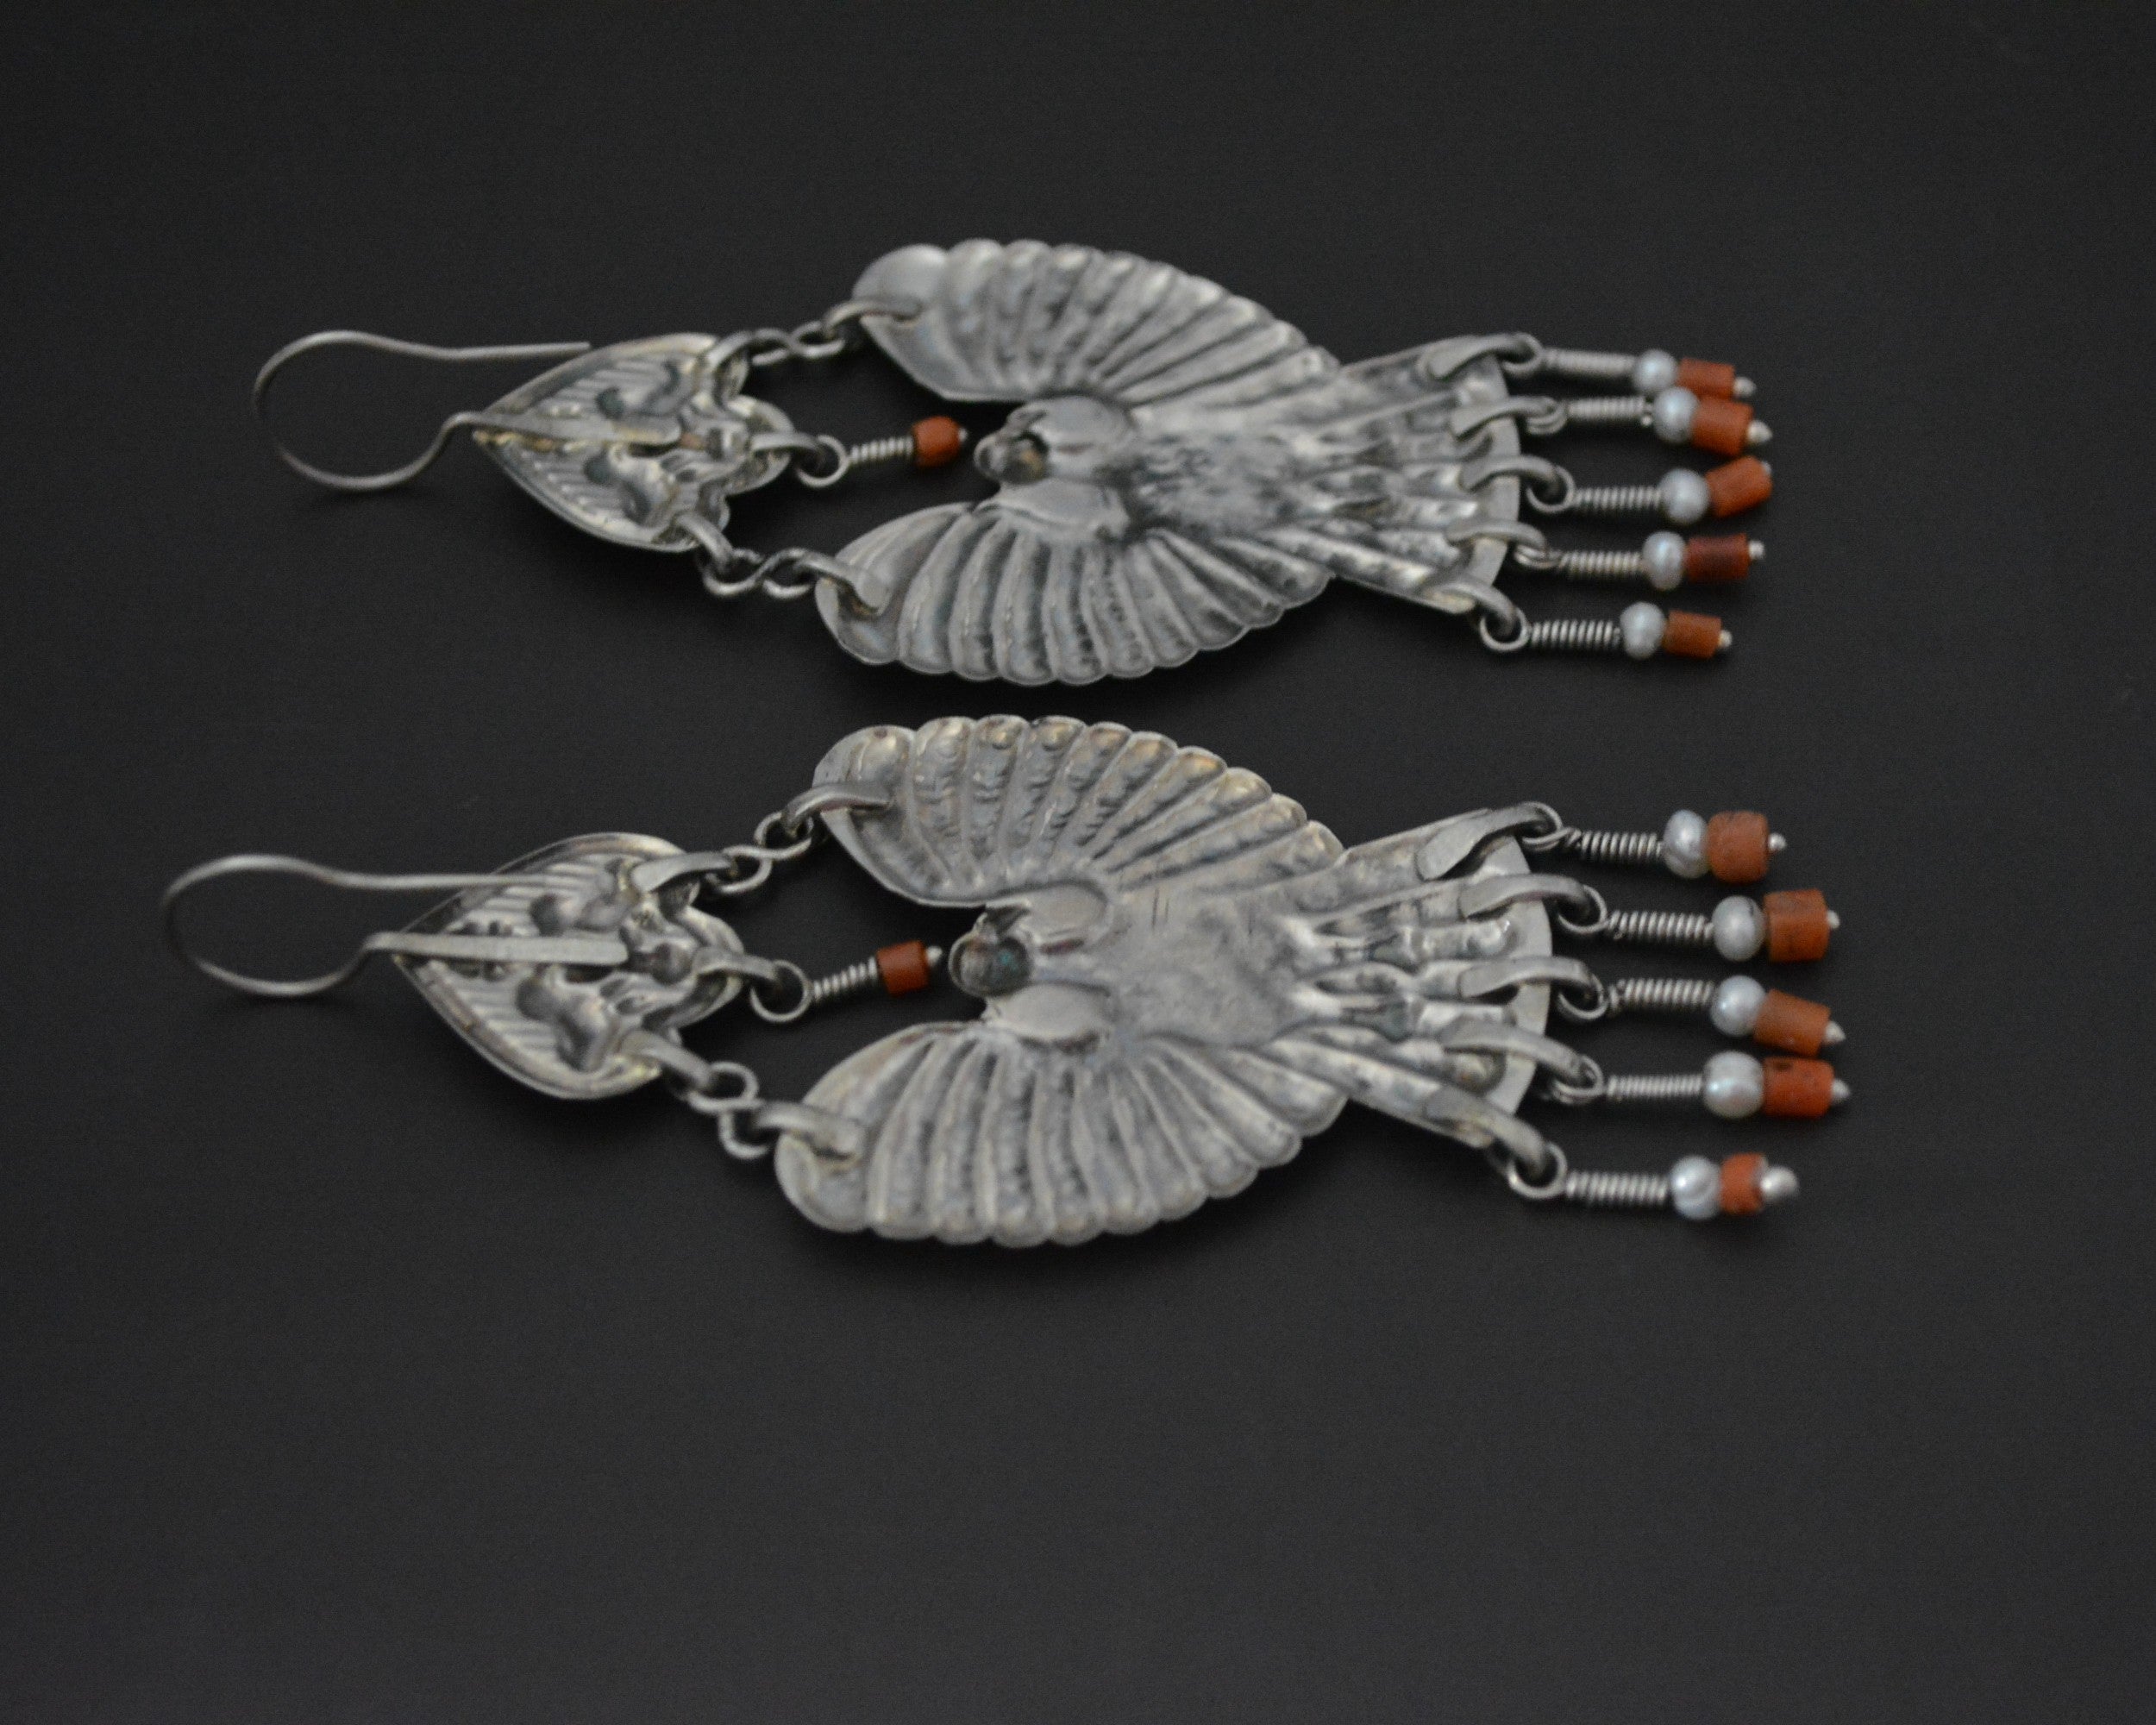 Uzbek Coral Earrings with Bird